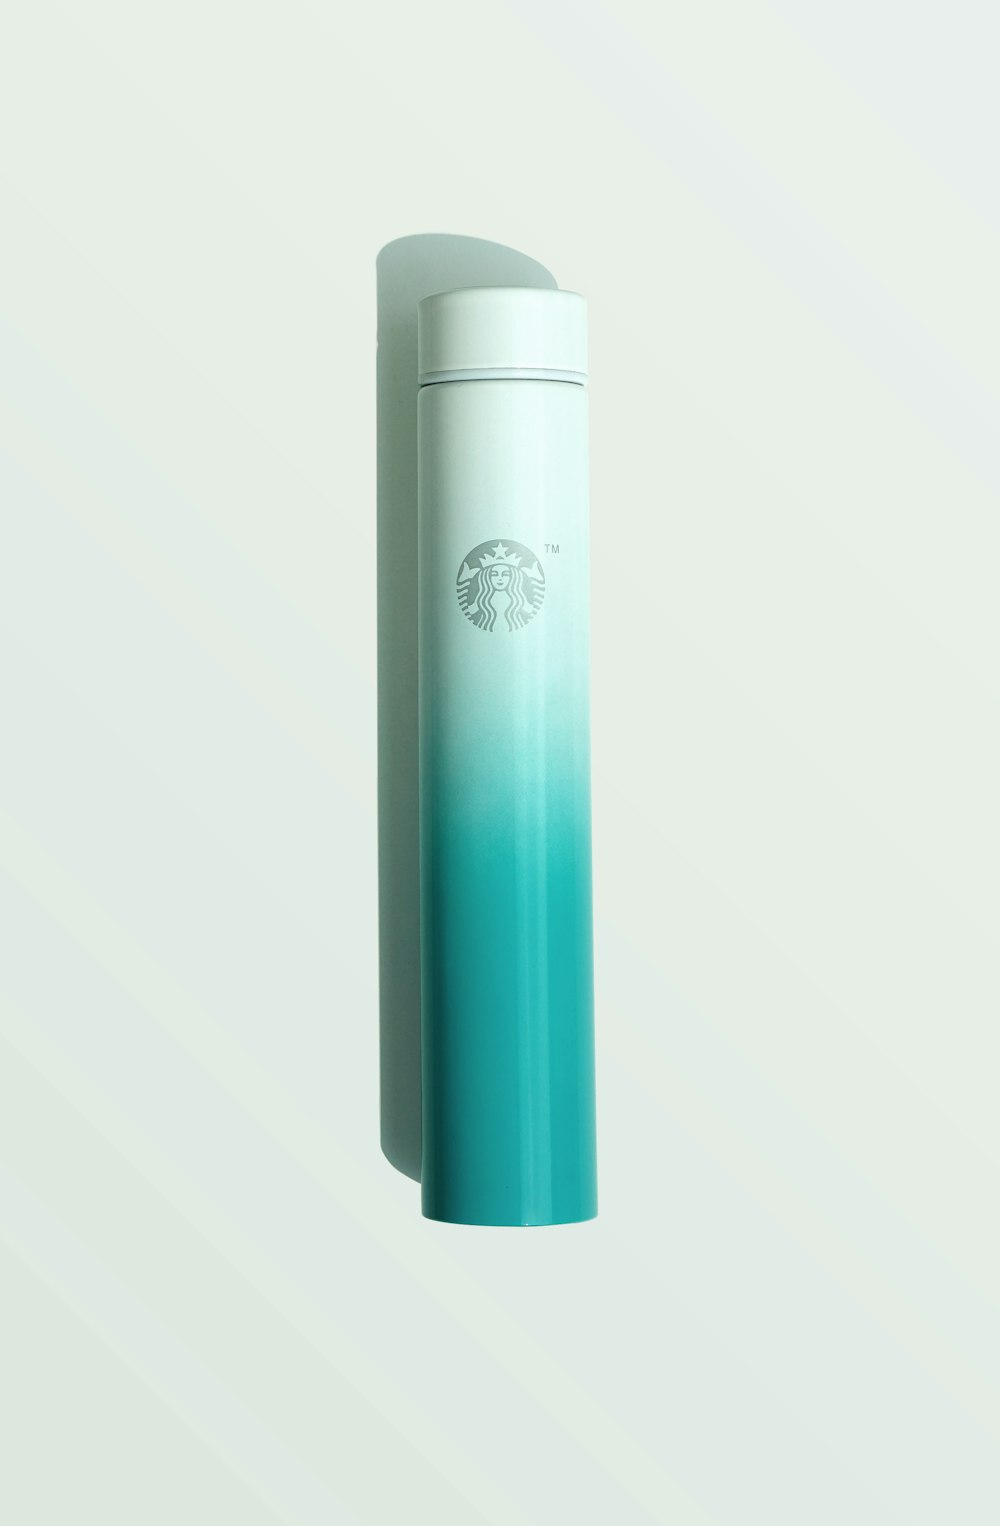 blue and white plastic tube